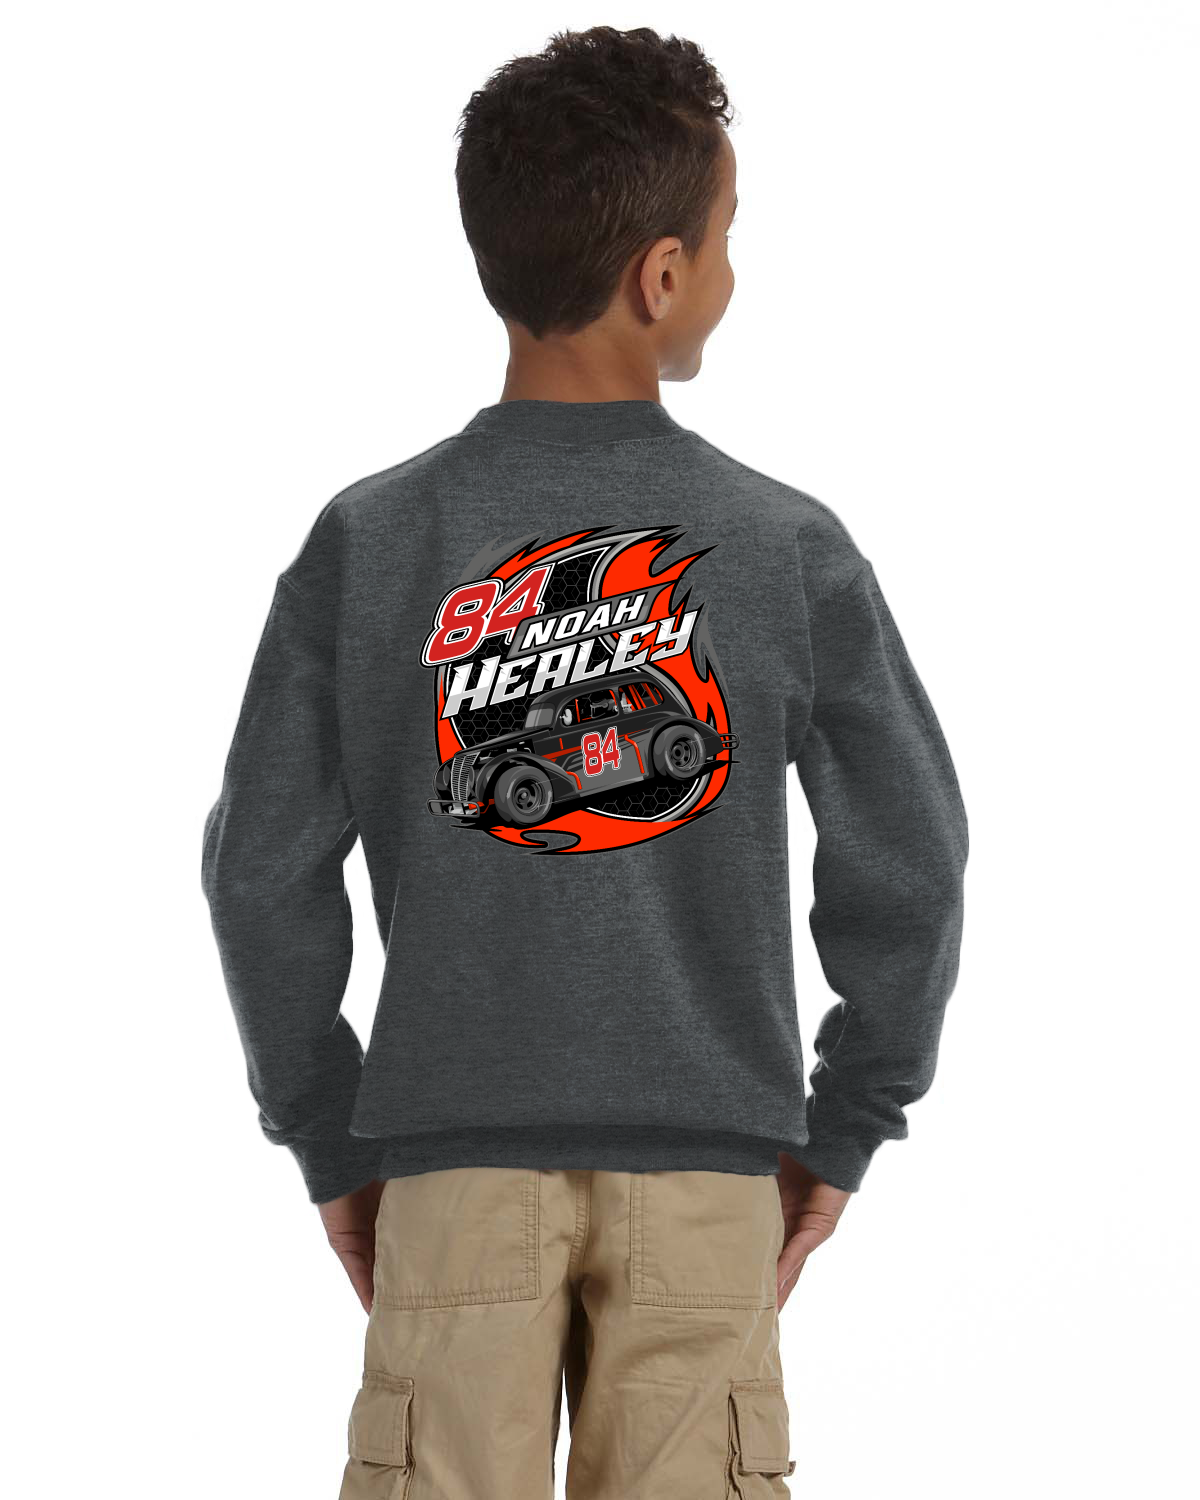 Noah Healey Racing Youth Crew neck sweater